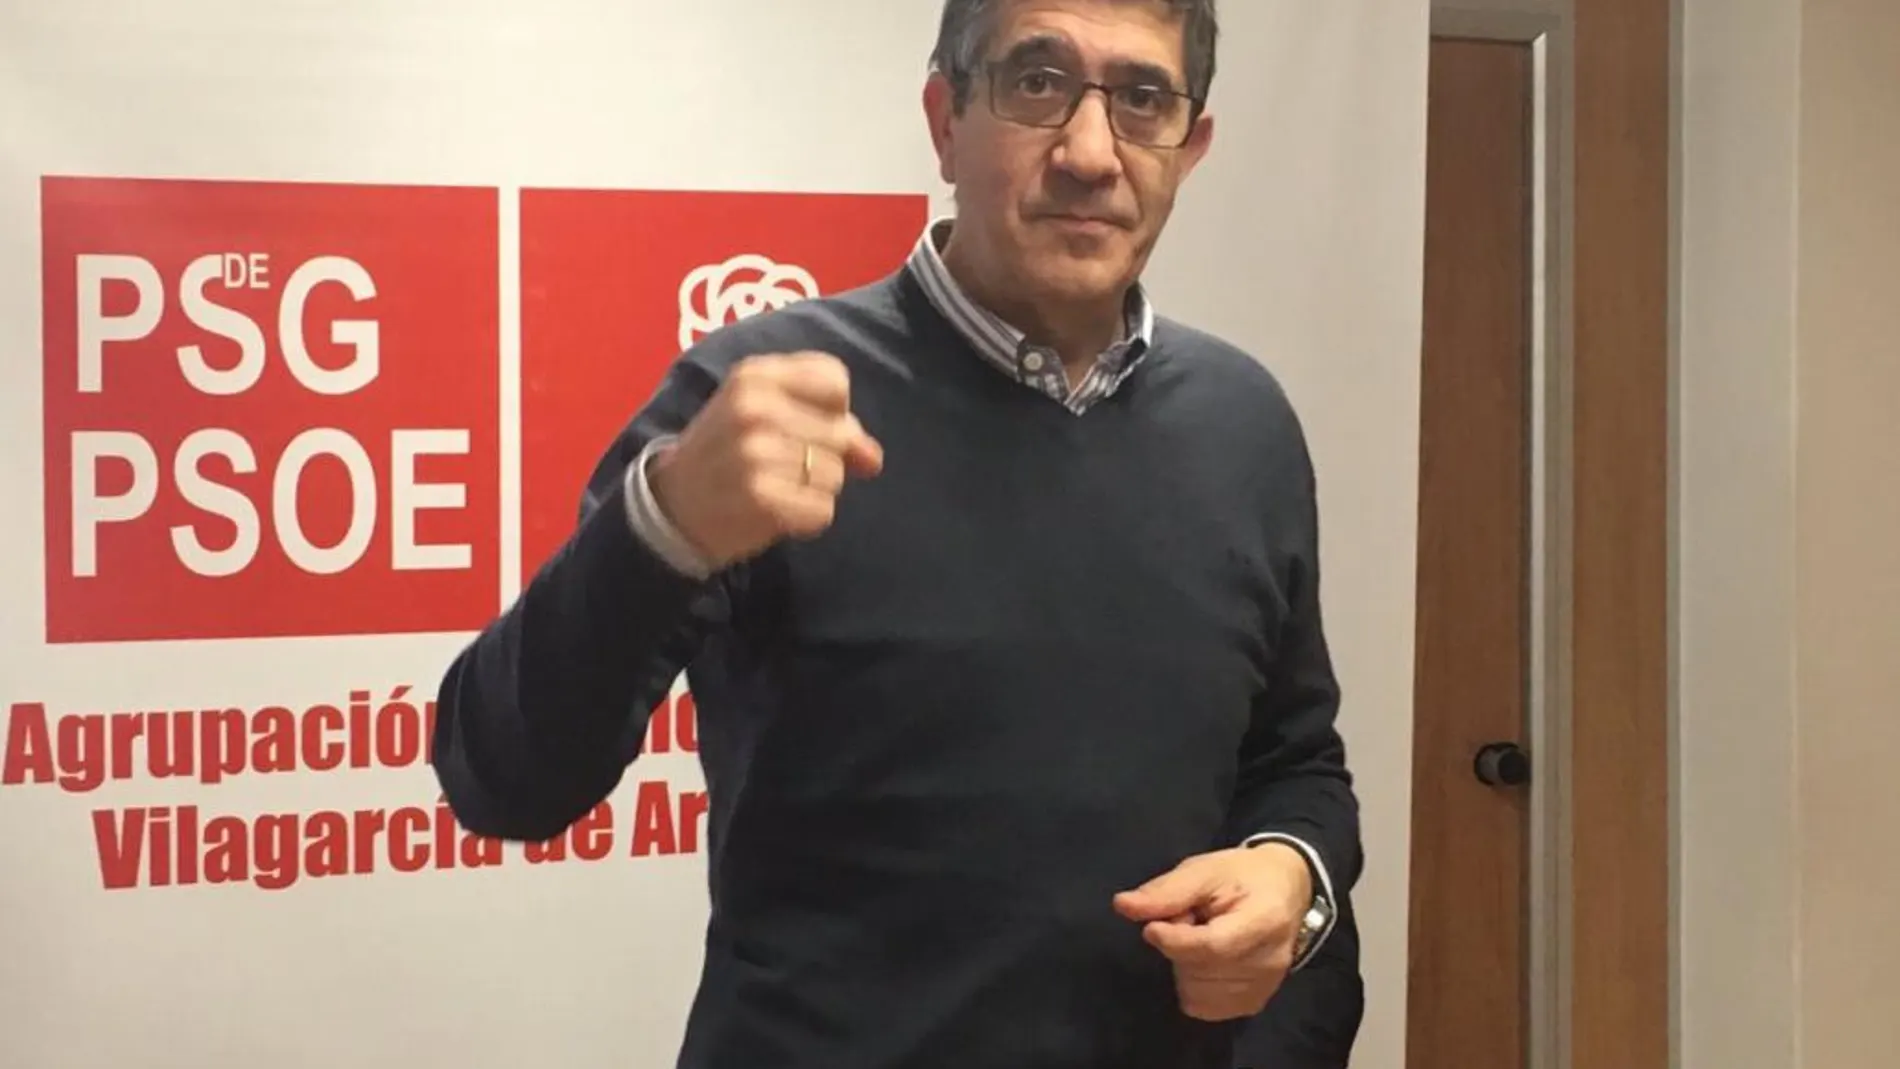 El candidato a la Secretaria General del PSOE Patxi López